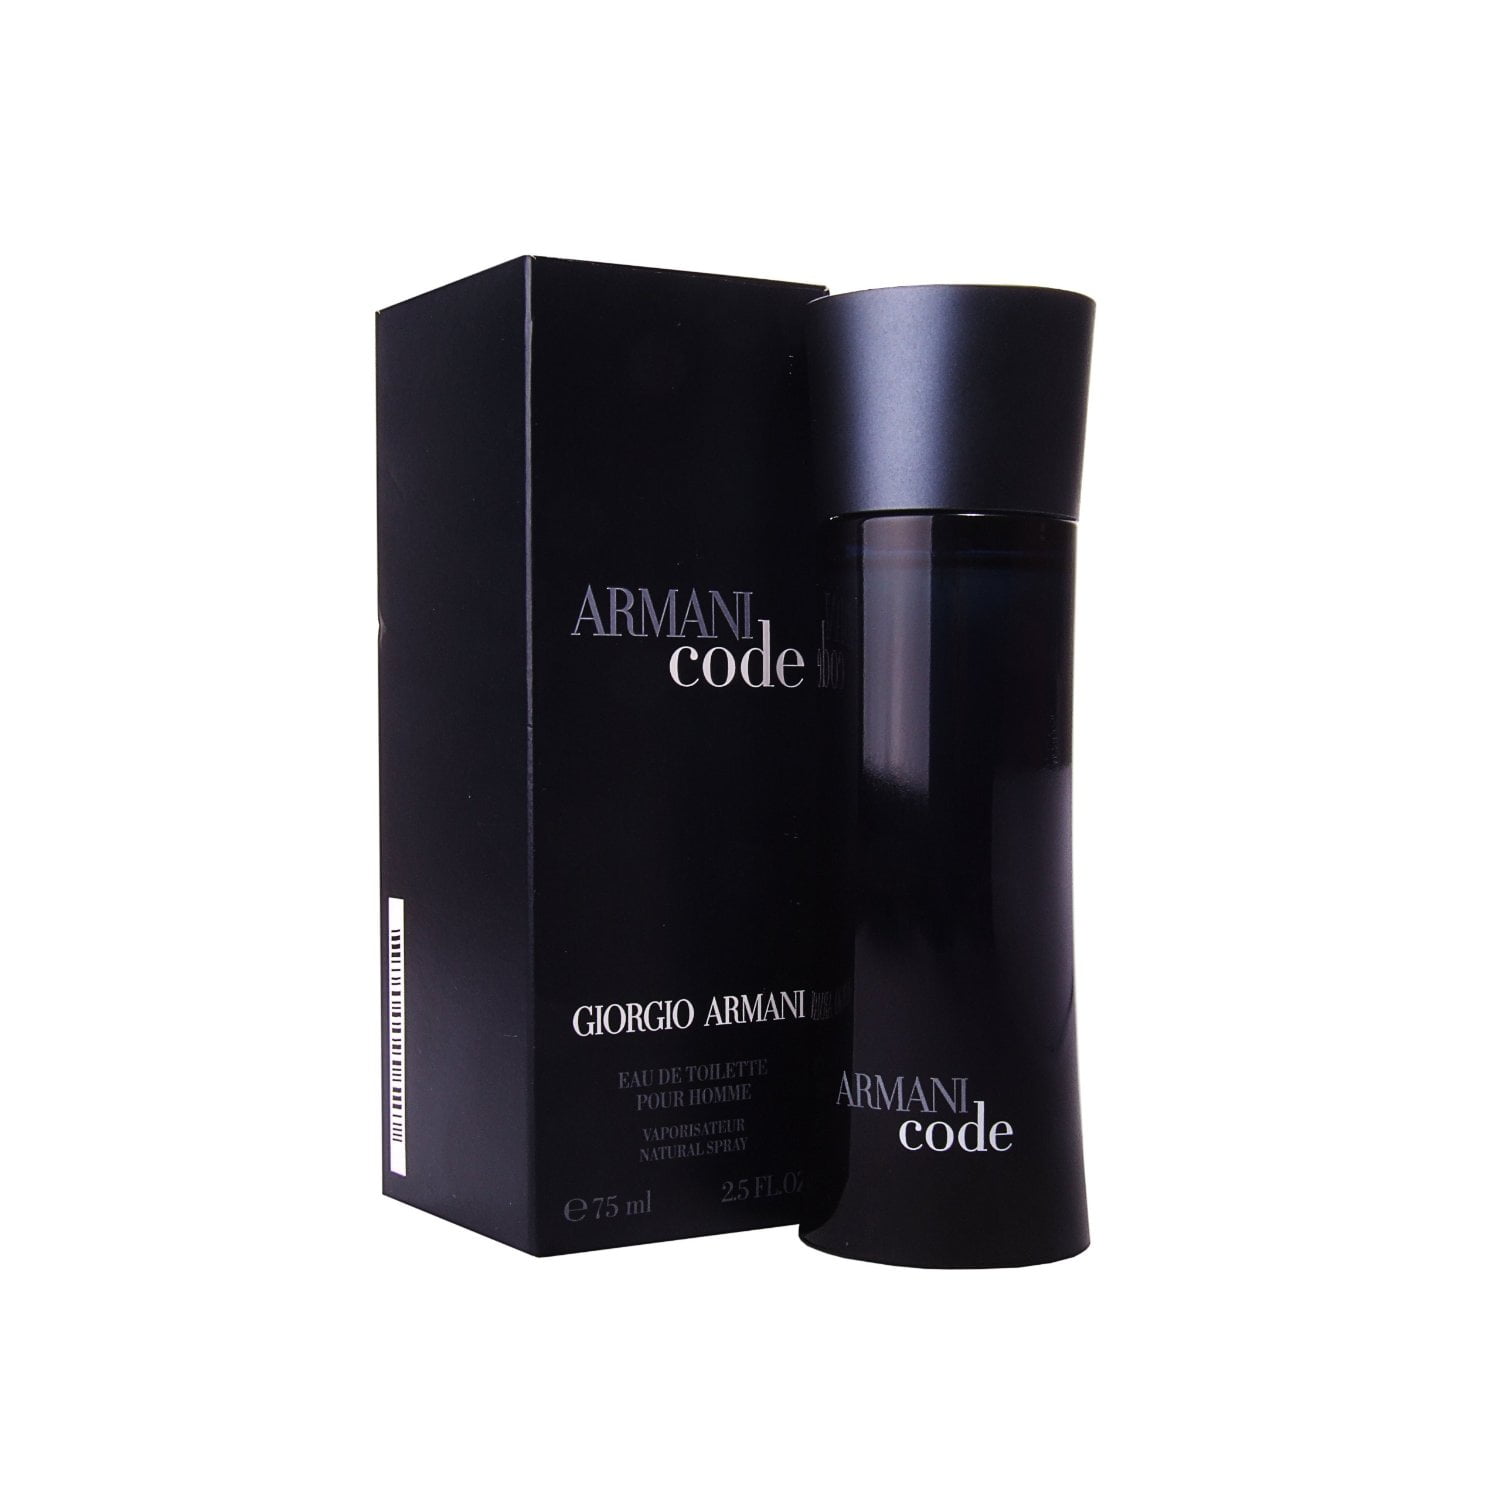 Armani Code Men 75ml - Perfume Bargains Plus